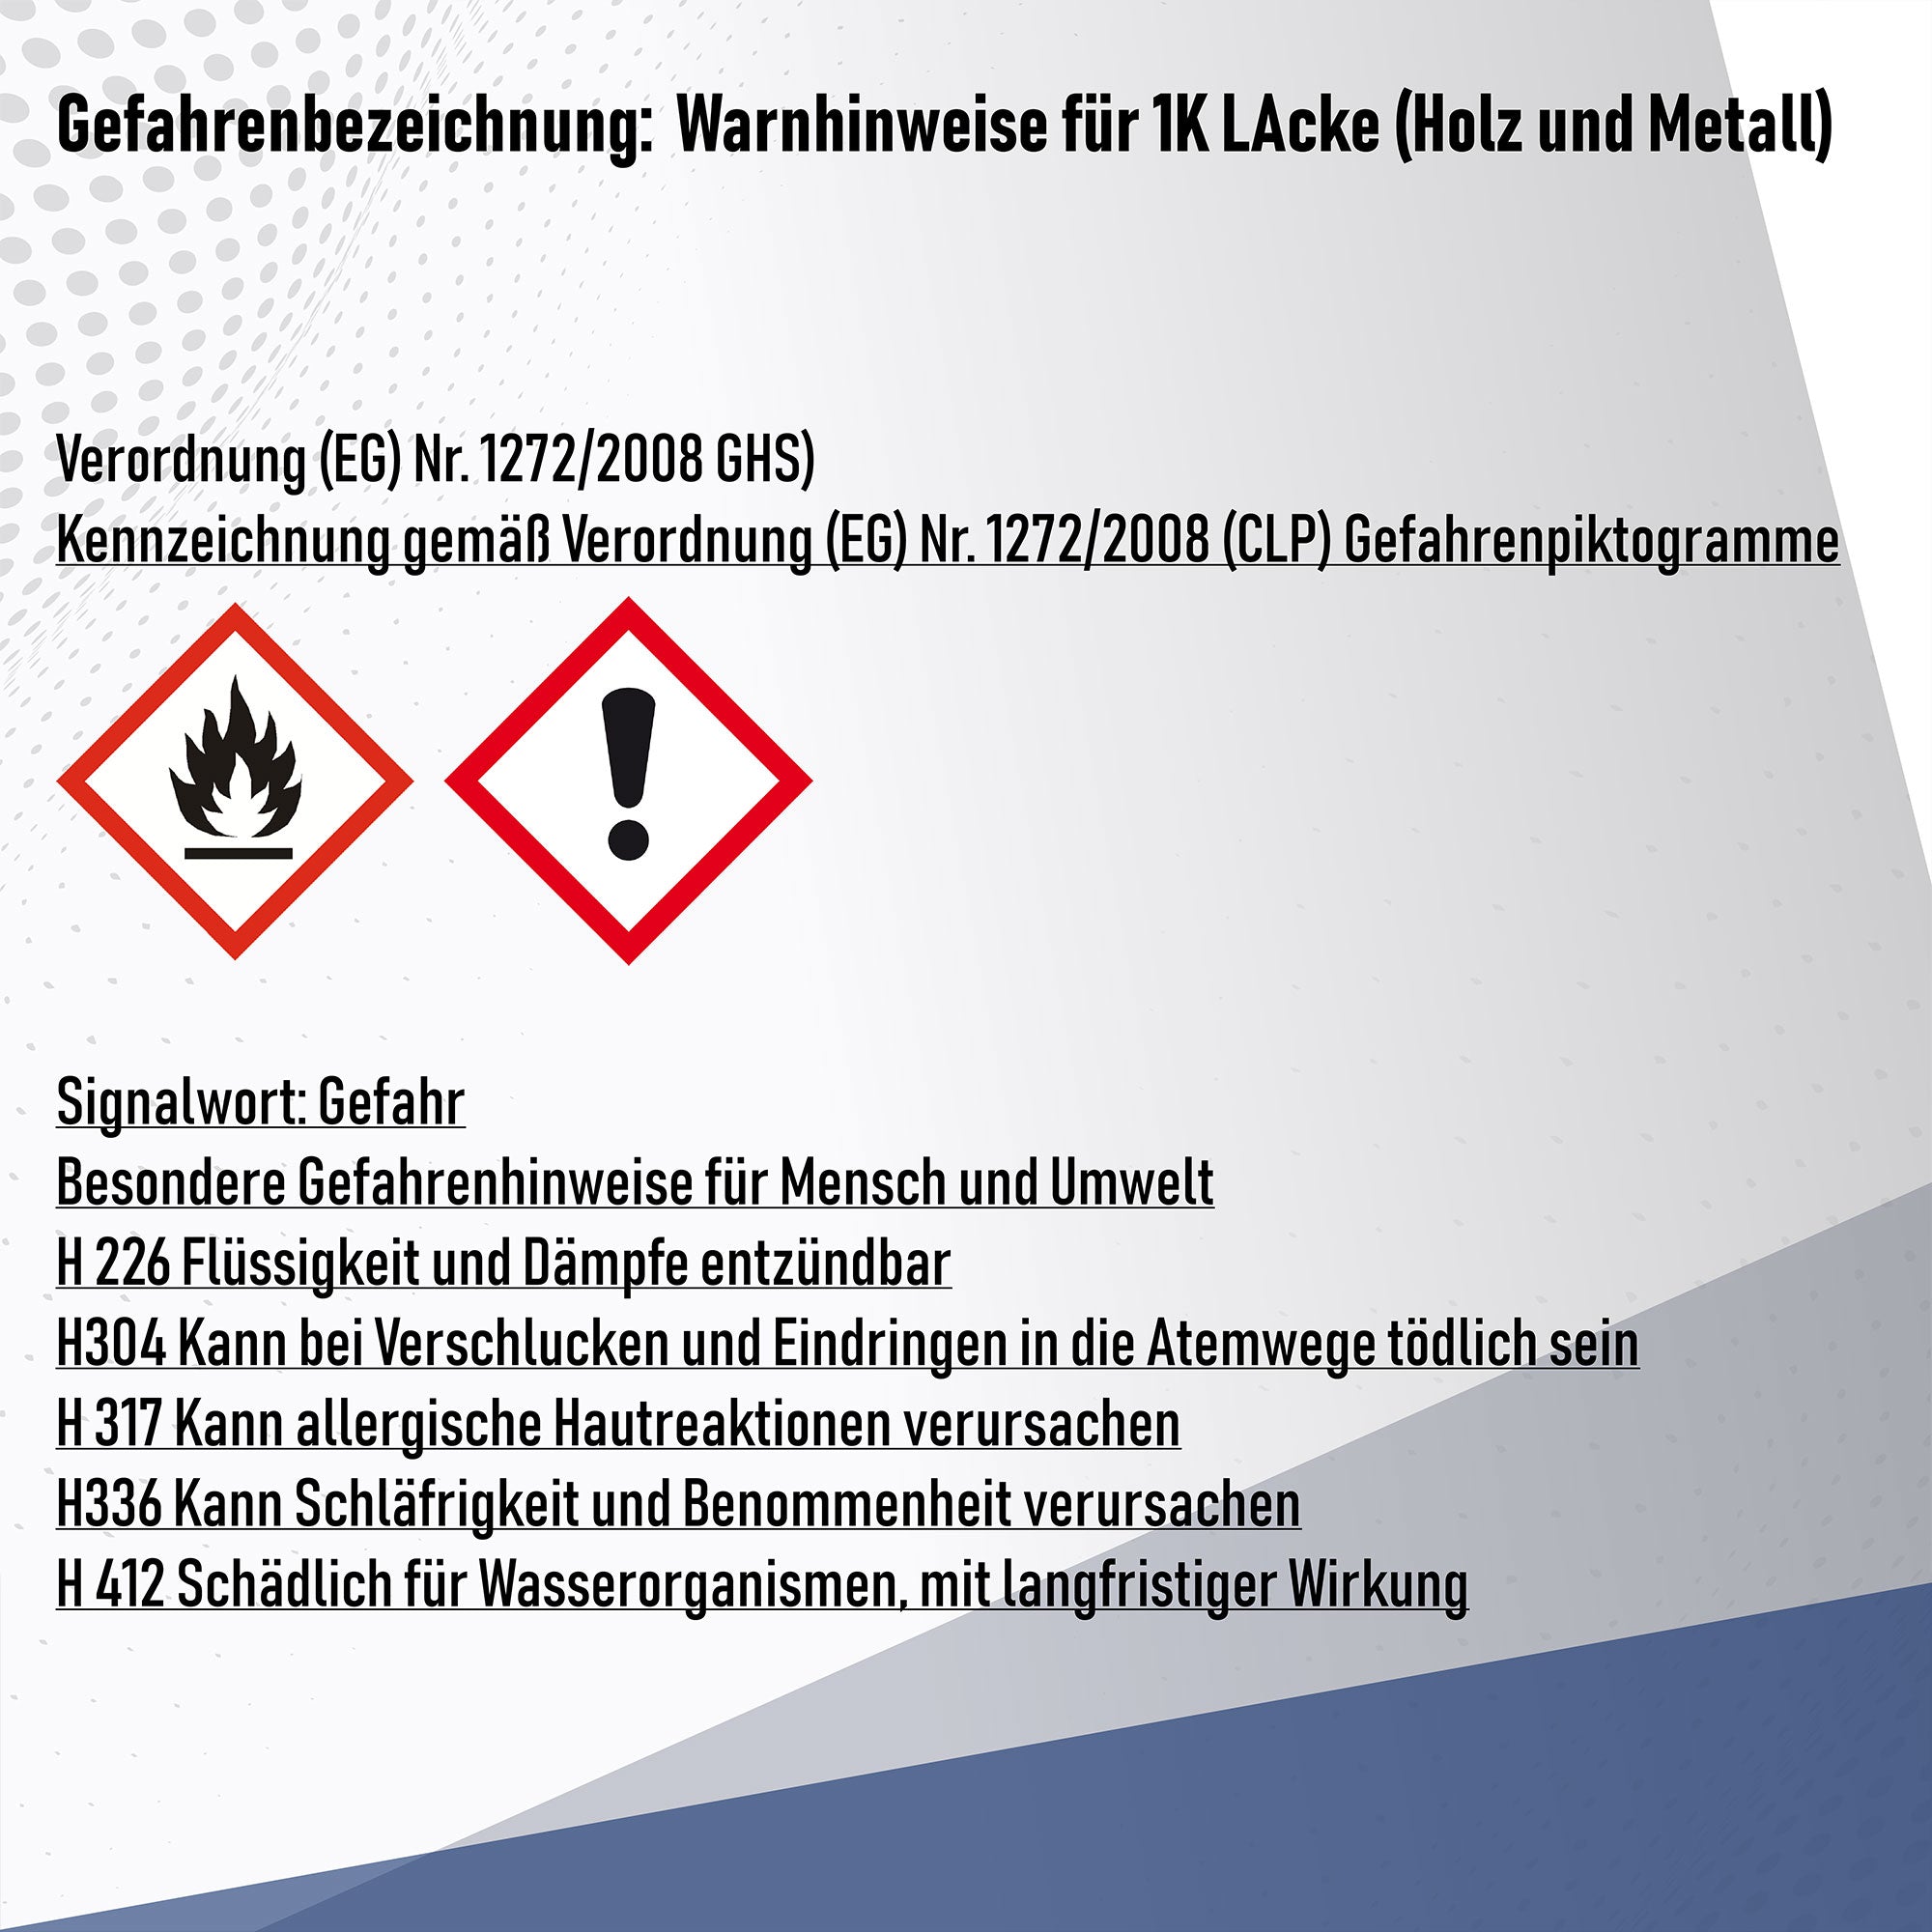 Hamburger Lack-Profi Buntlack in Rotviolett RAL 4002 mit Lackierset (X300) & Verdünnung (1 L) - 30% Sparangebot